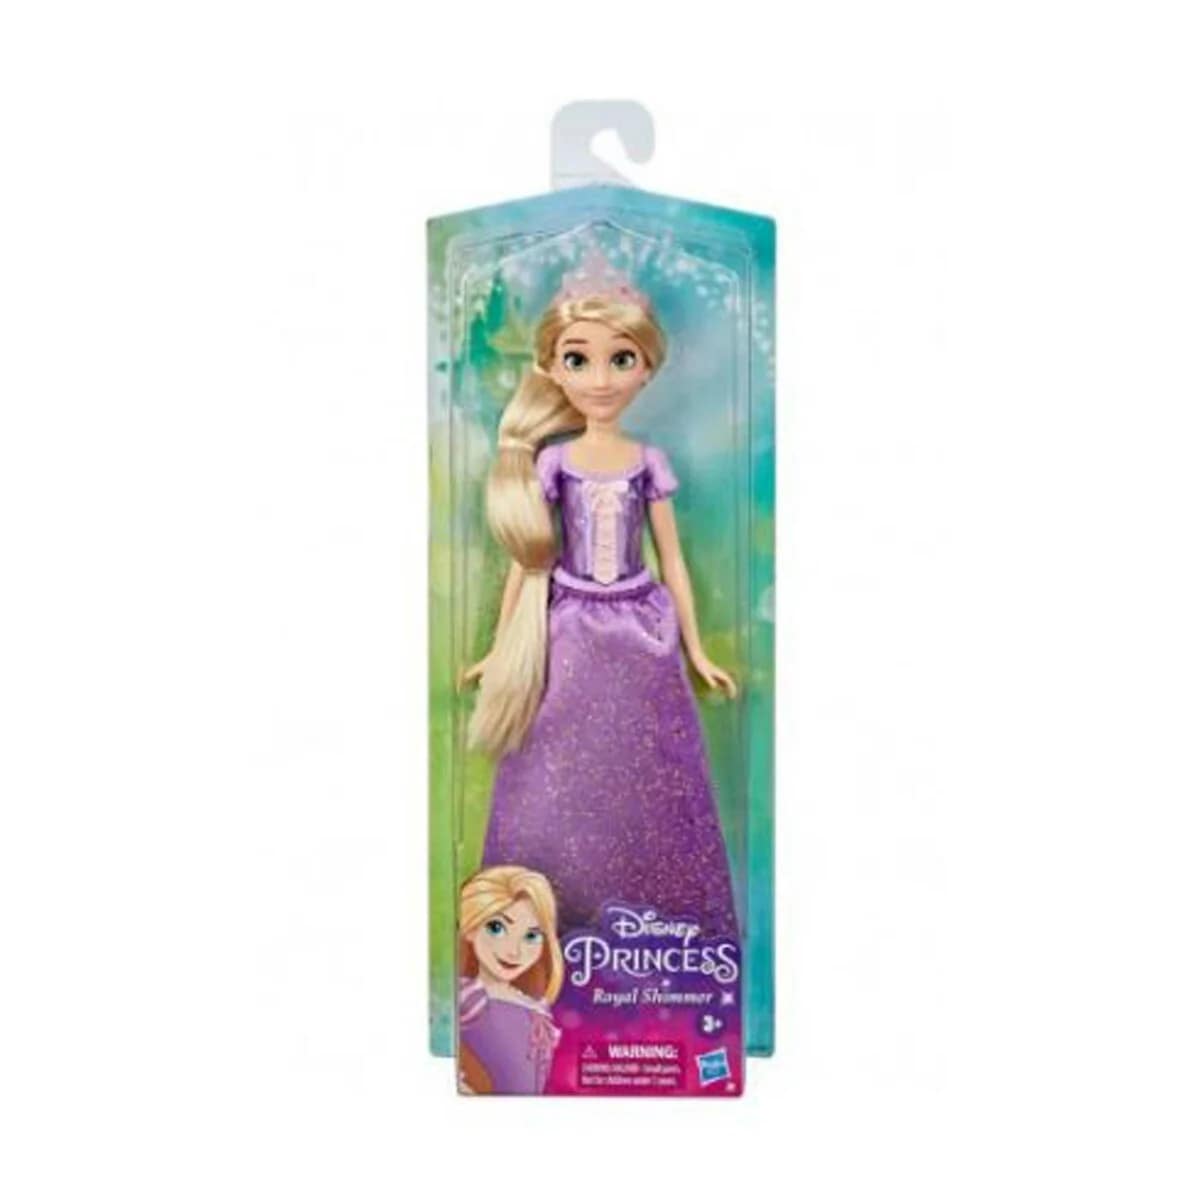 Disney Princess Royal Shimmer Rapunzel Fashion Doll